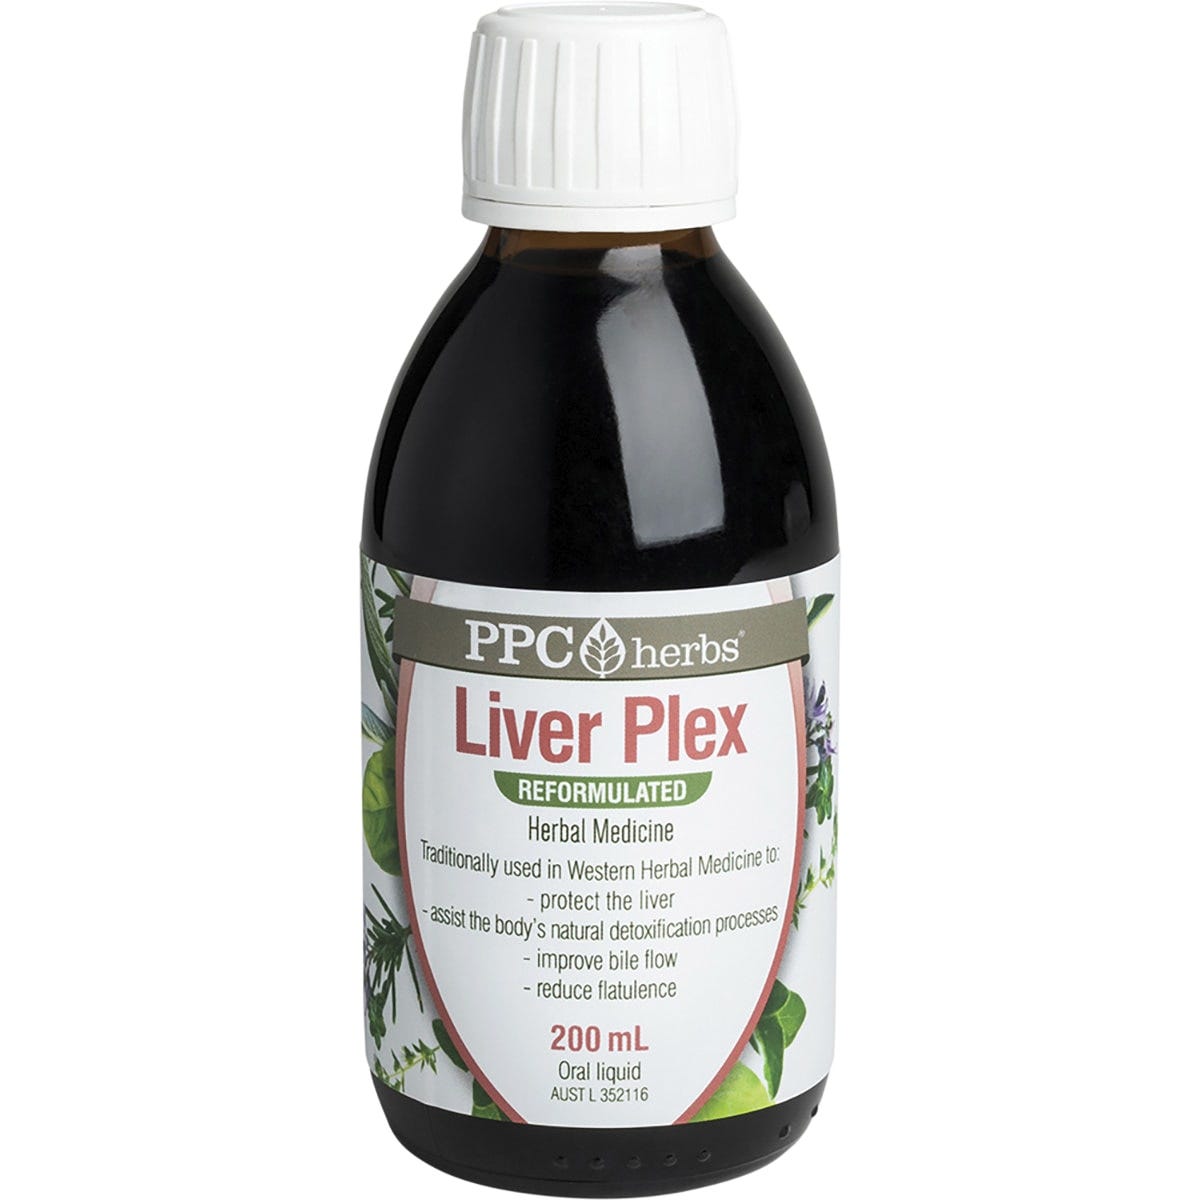 PPC Herbs Liver-Plex Herbal Remedy 200ml - Dr Earth - Detox, Homeopathics